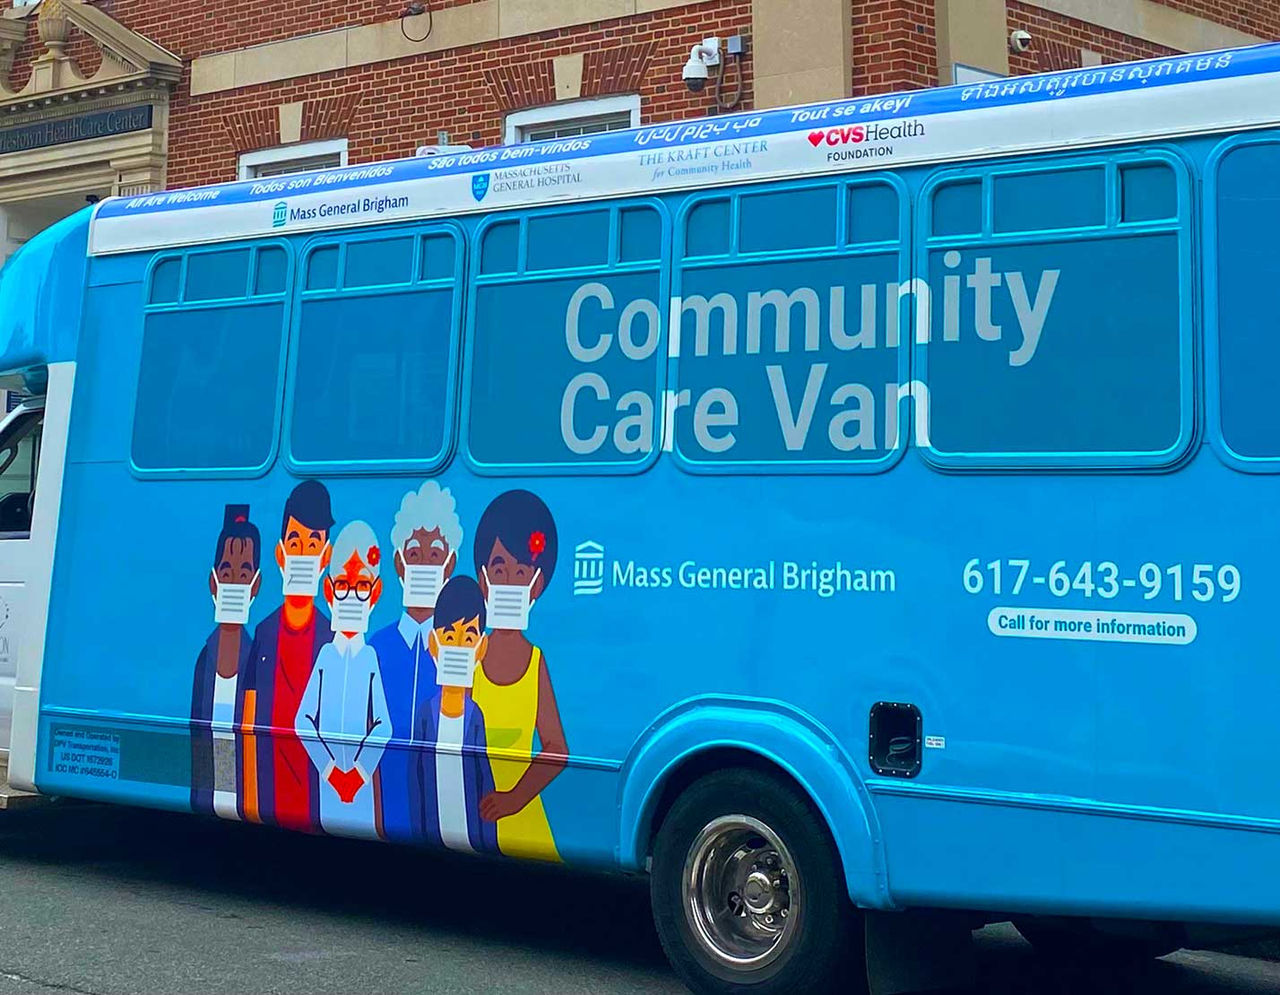 Mass General Brigham Community Care Van parked in street